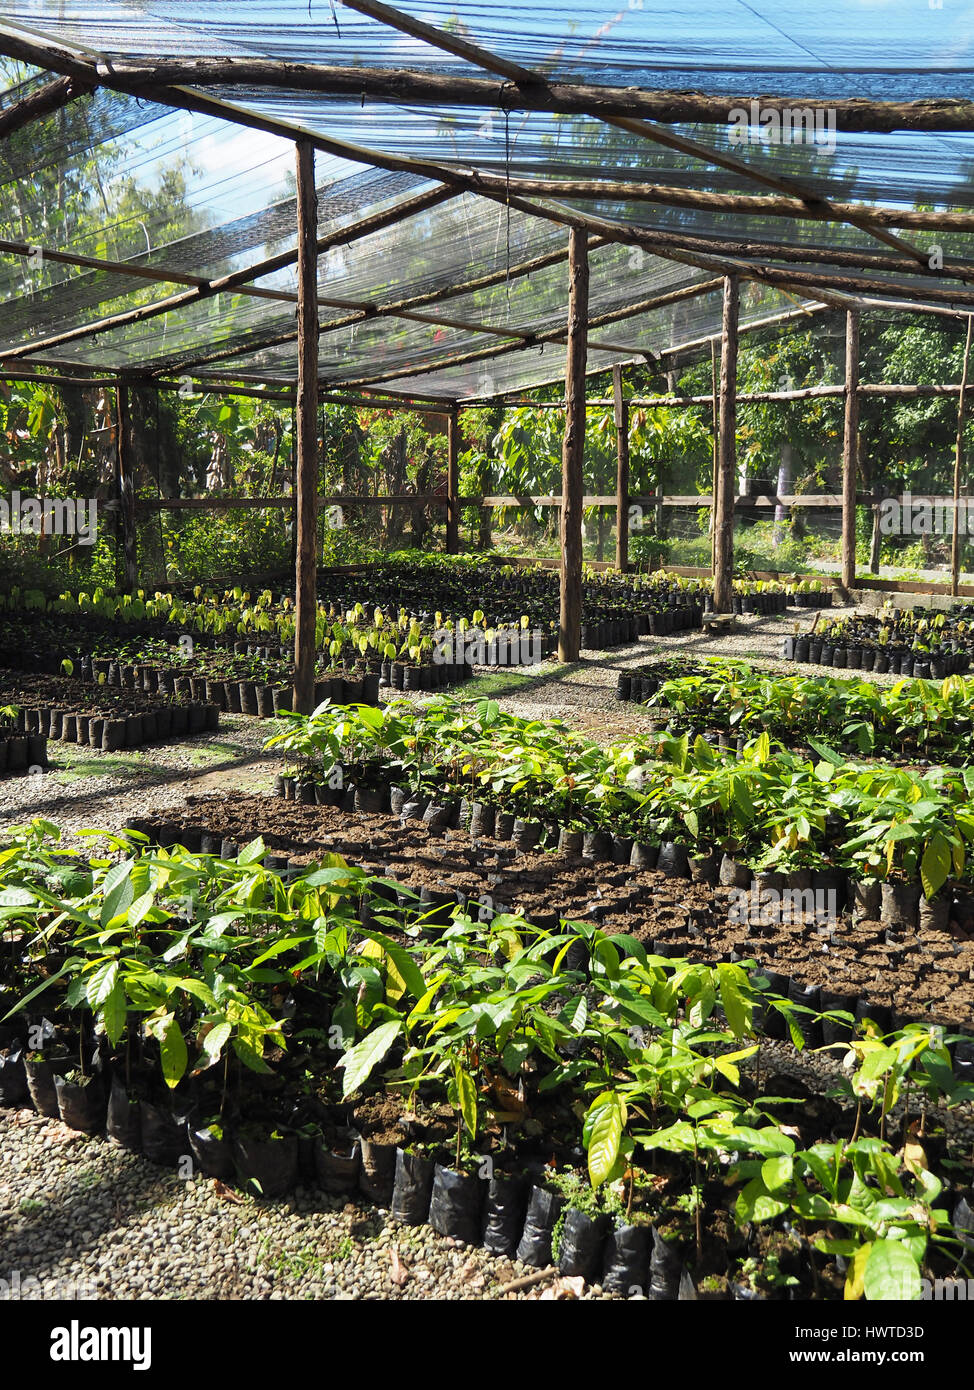 Kakao-Gärtnerei in Schokolade Frauenkooperative, Chocal, in der Nähe von Puerto Plata, Dominikanische Republik. Stockfoto